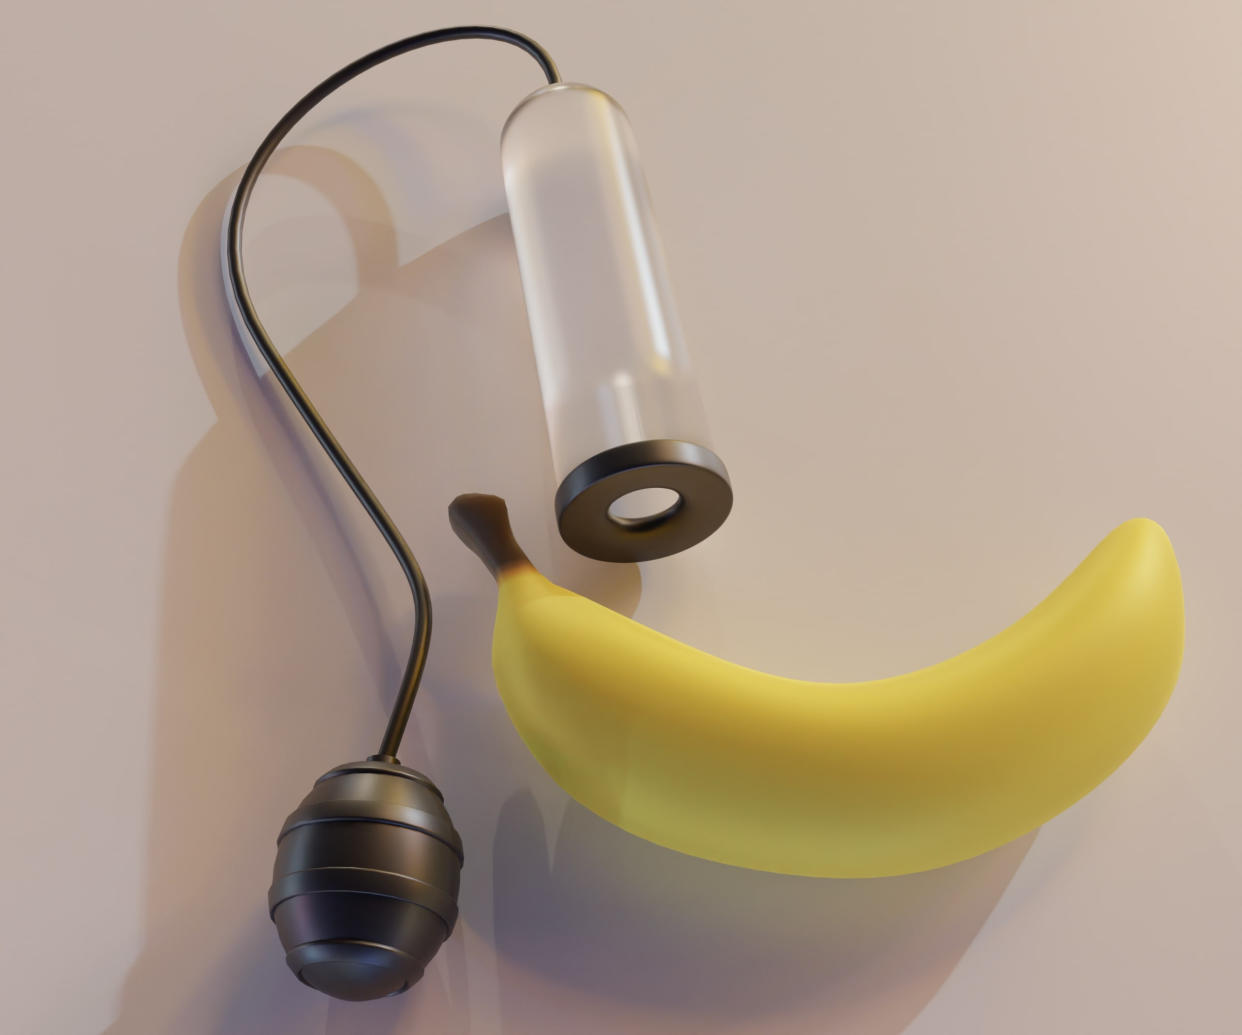 A penis enlarger pump next to a yellow banana.